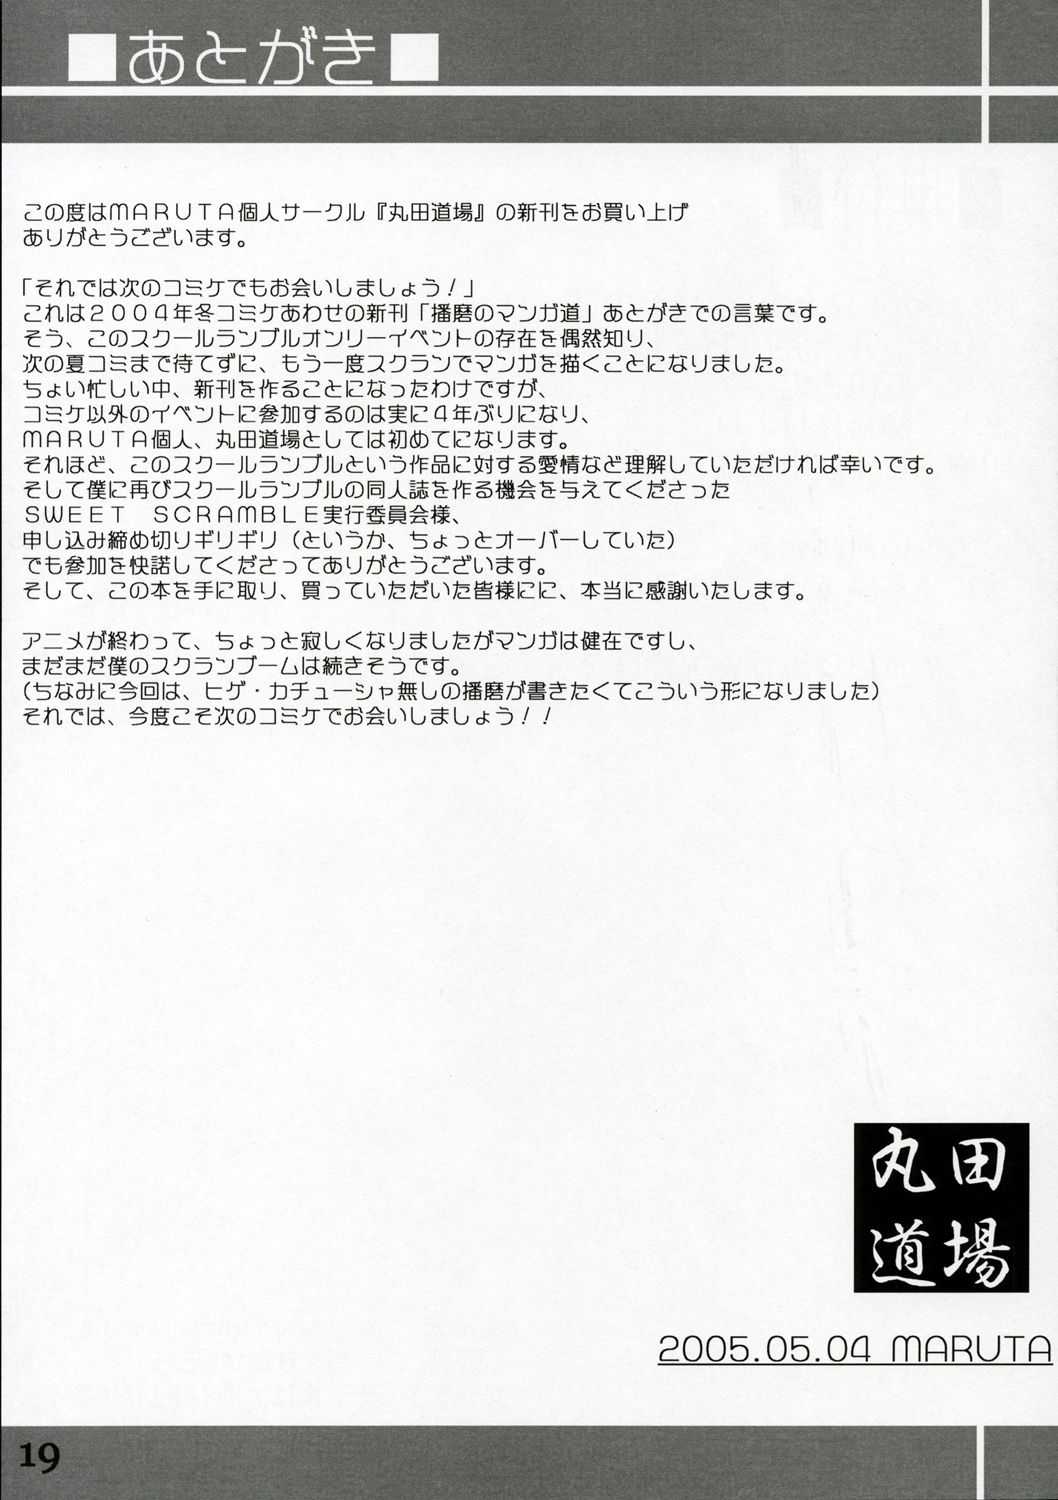 Harimano Manga Michi vol.2 